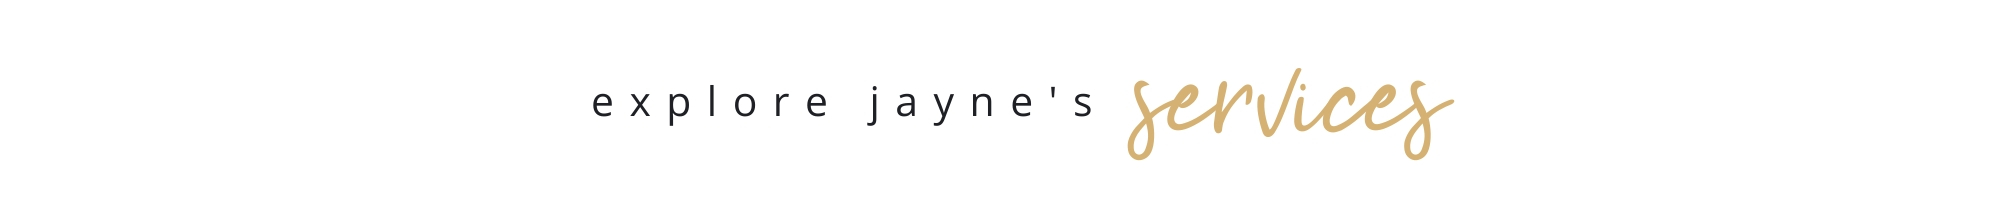 explore Jayne's services